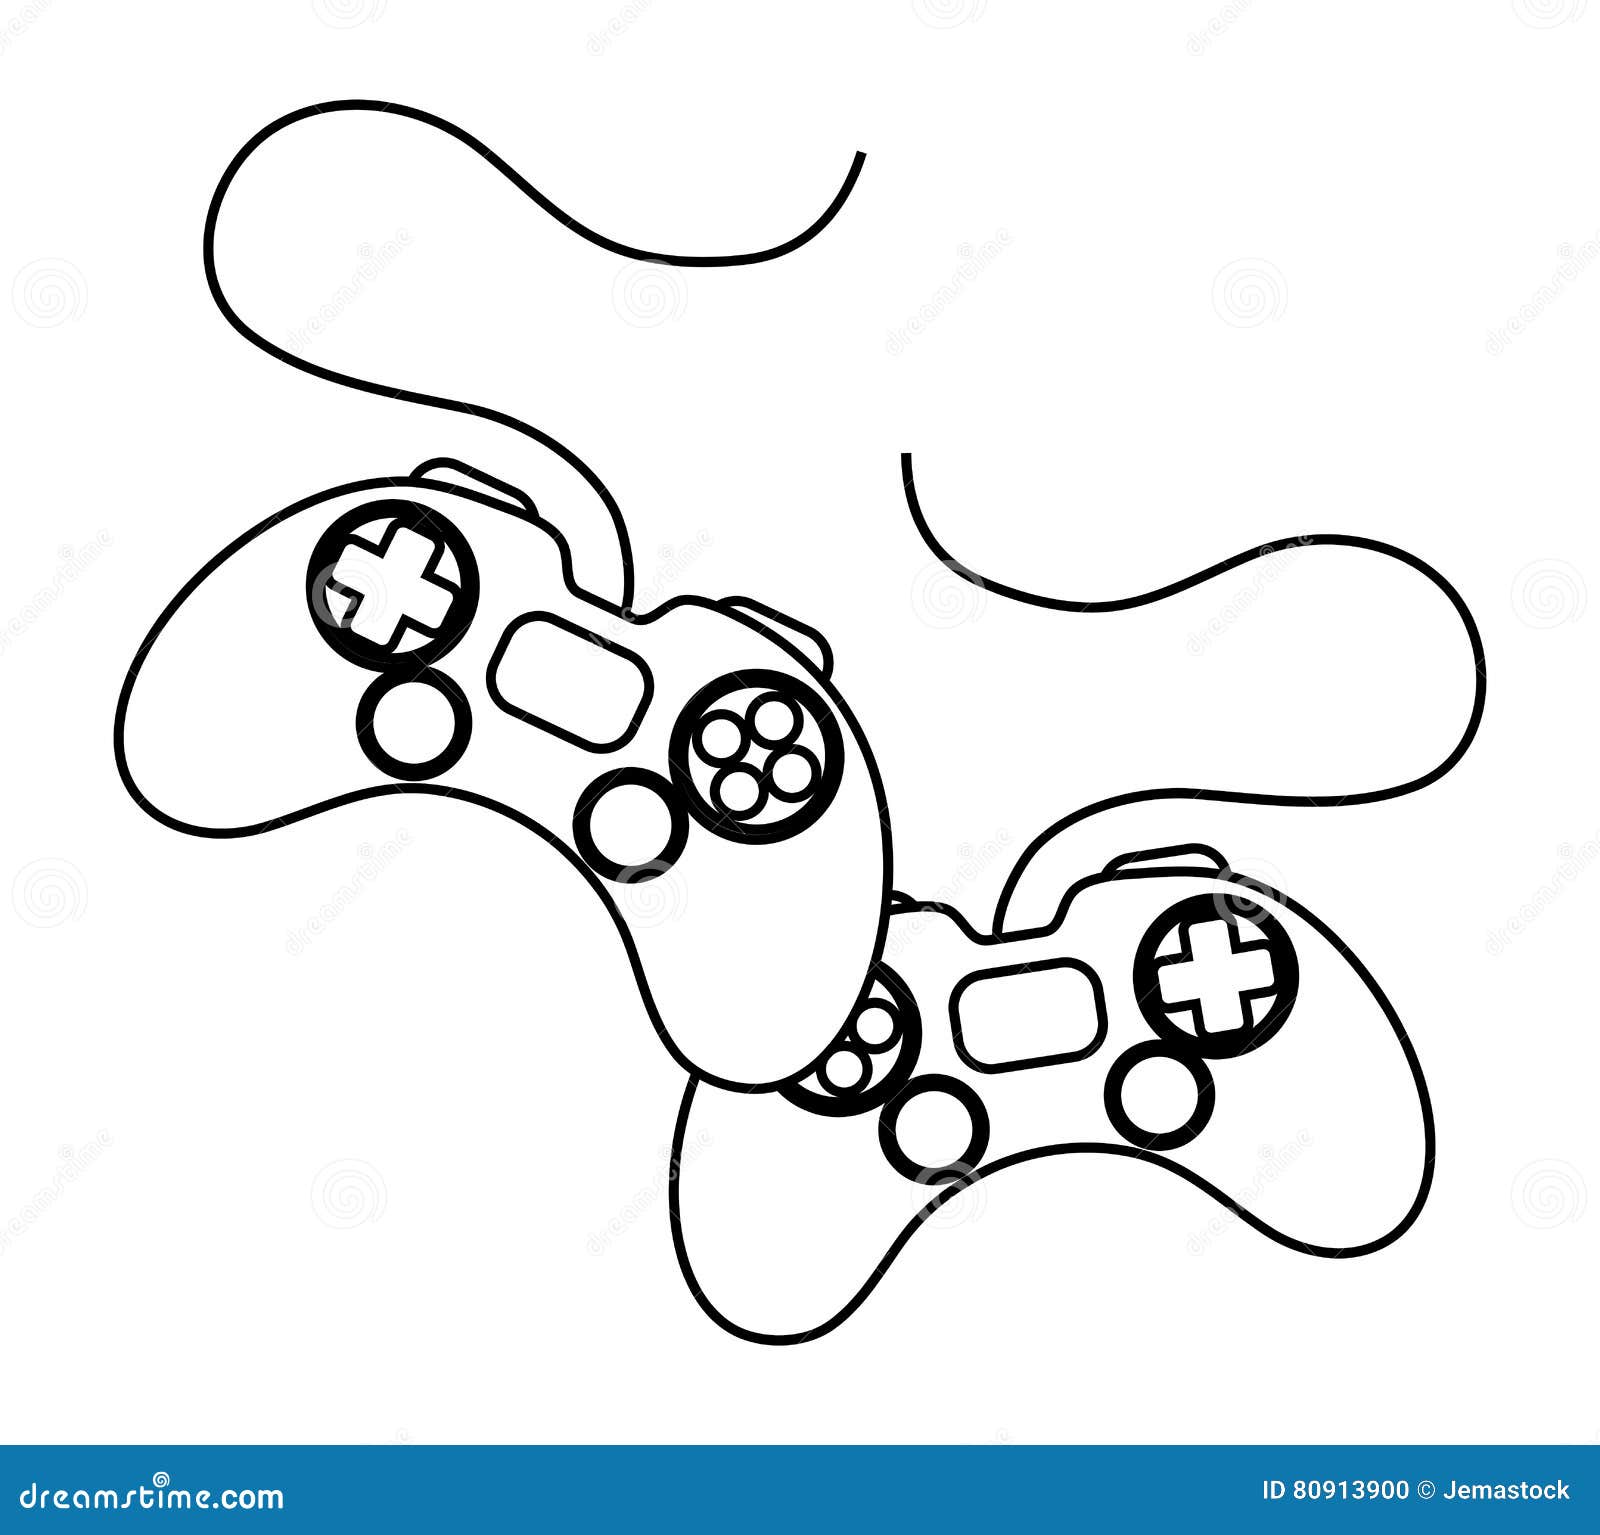 Desenho de Controle de video game para colorir